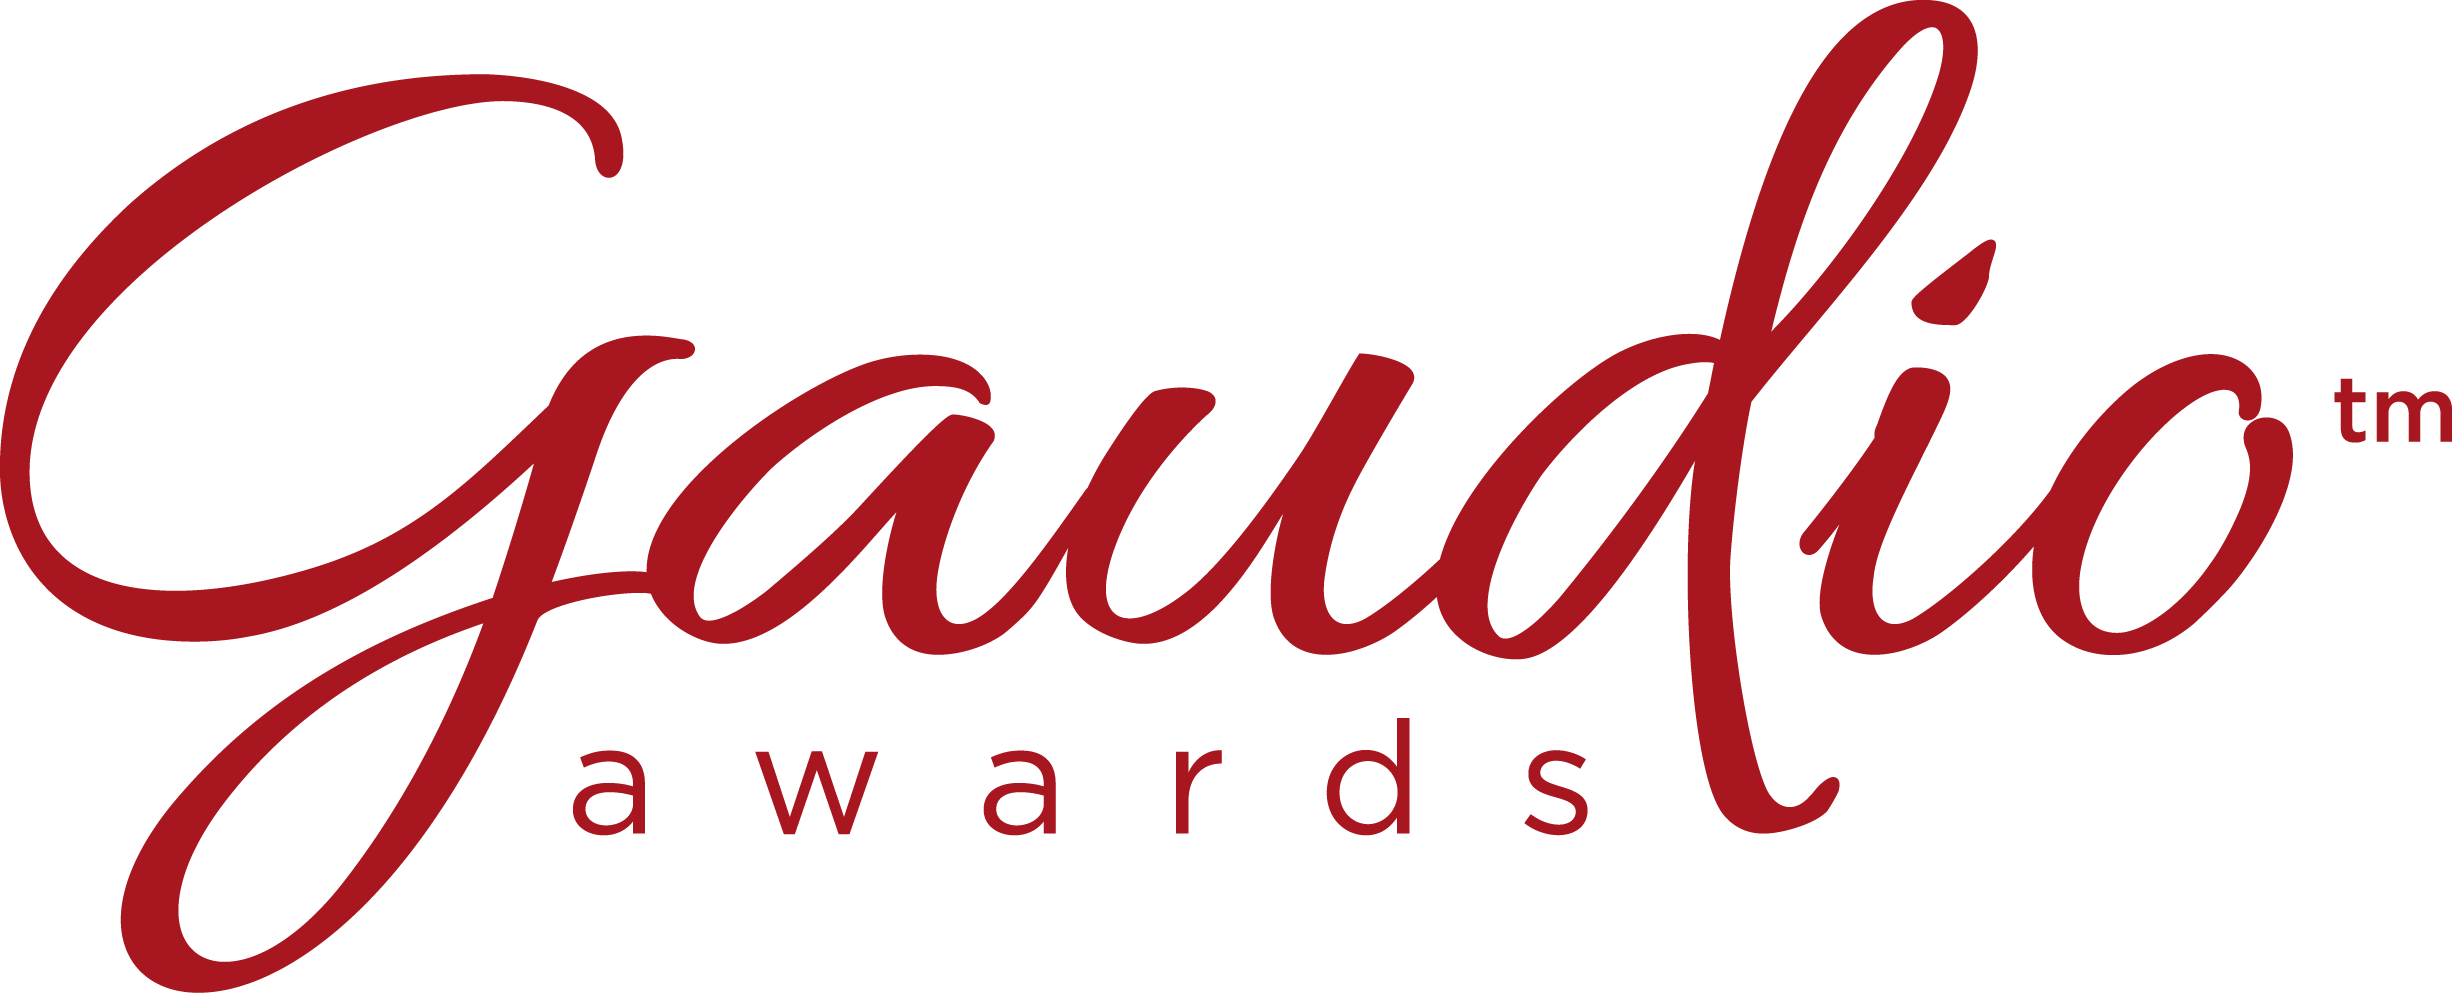 logo for Gaudio Awards